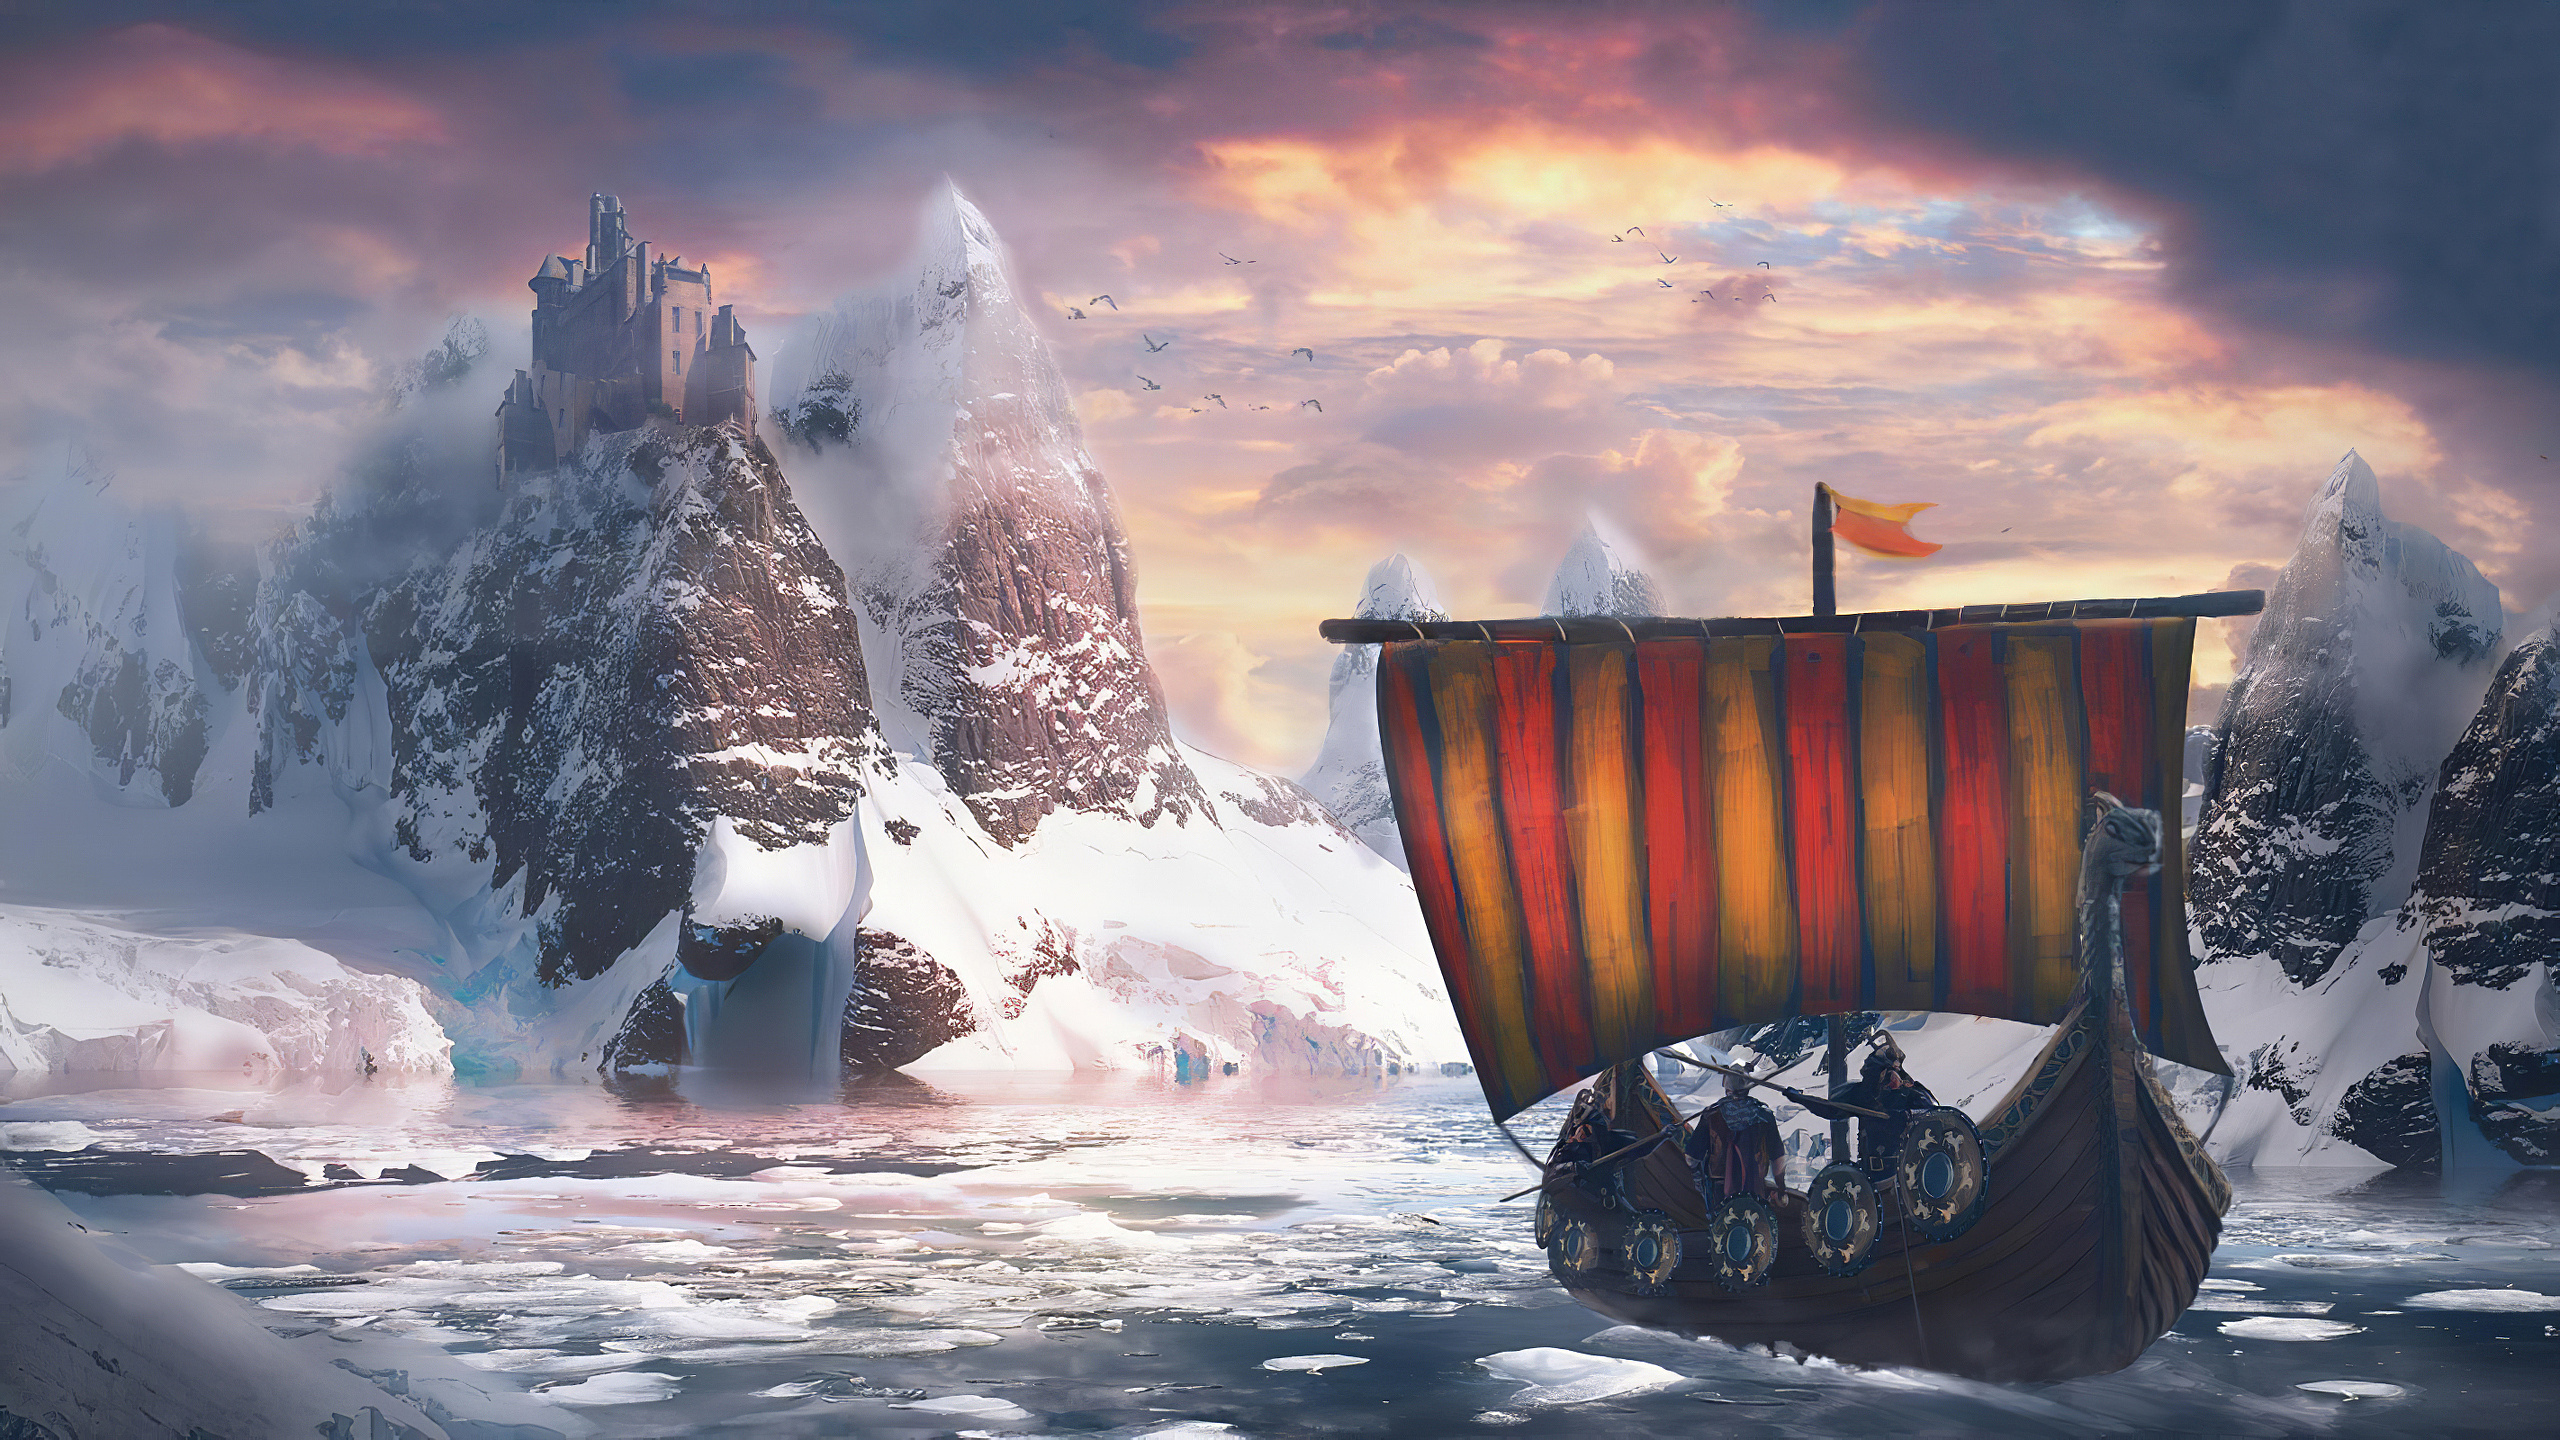 Digital Art Drakkar Vikings Castle Snow Cold Ice Water Rocks Mountains 2560x1440